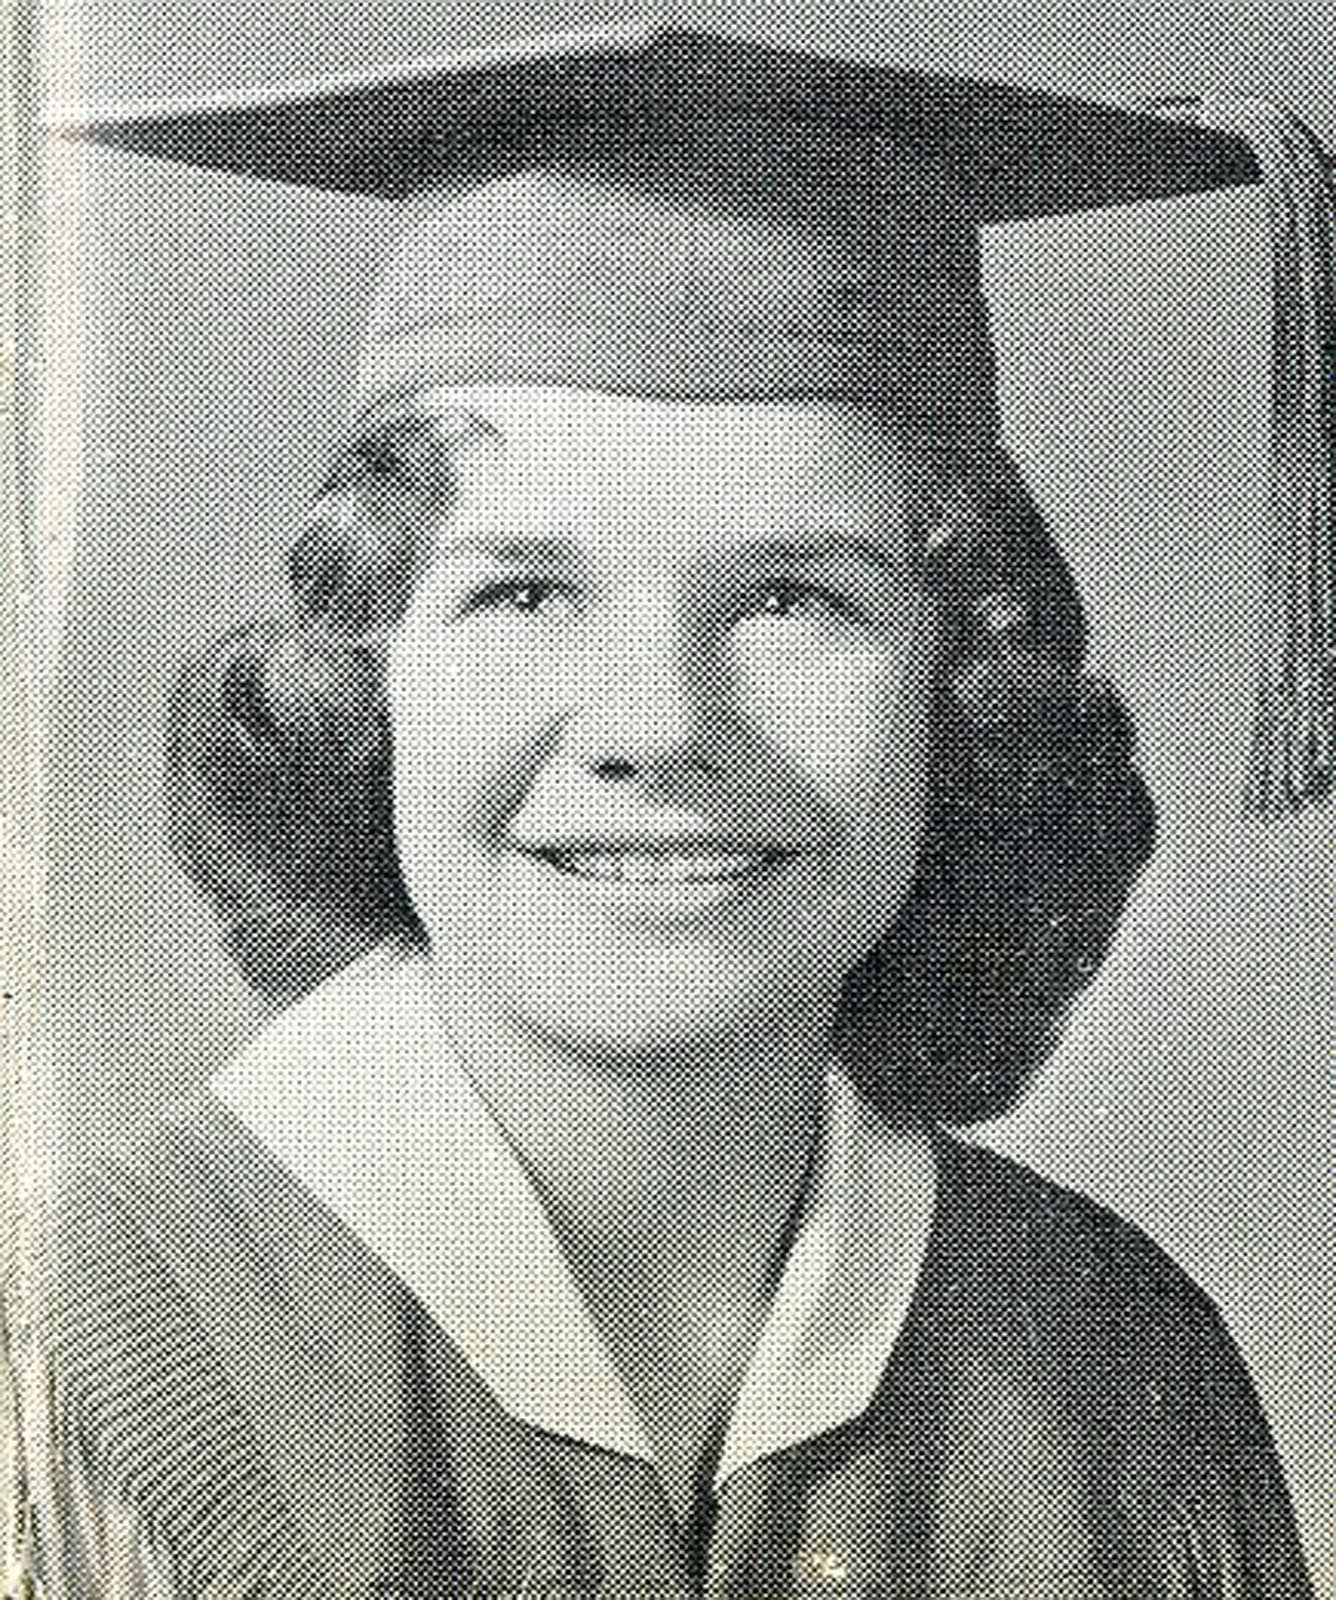 Best of the Best - 1960 Janis Joplin High School Yearbook